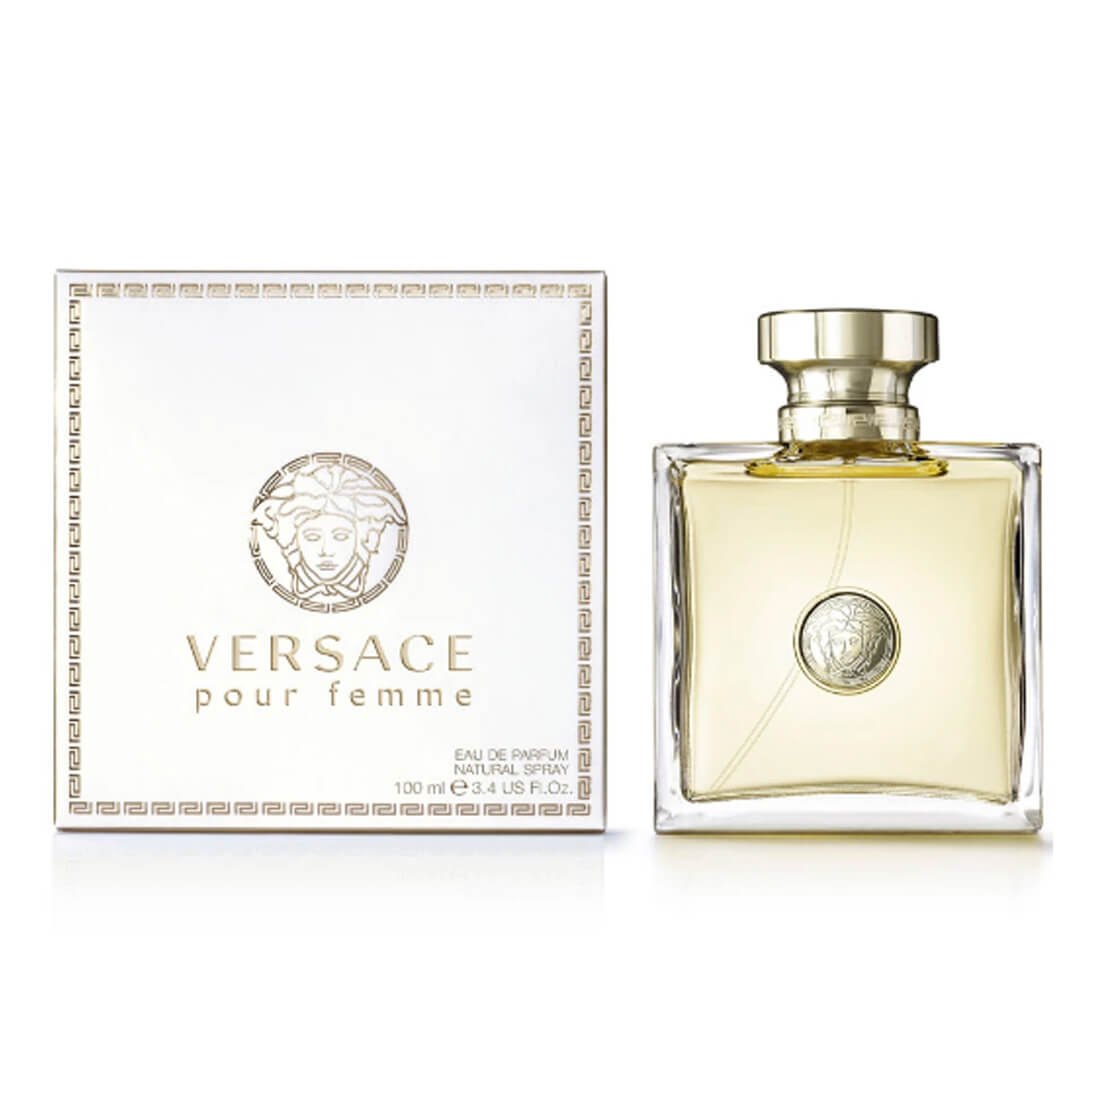 Versace Pour Femme EDP Perfume For Women - 100ml